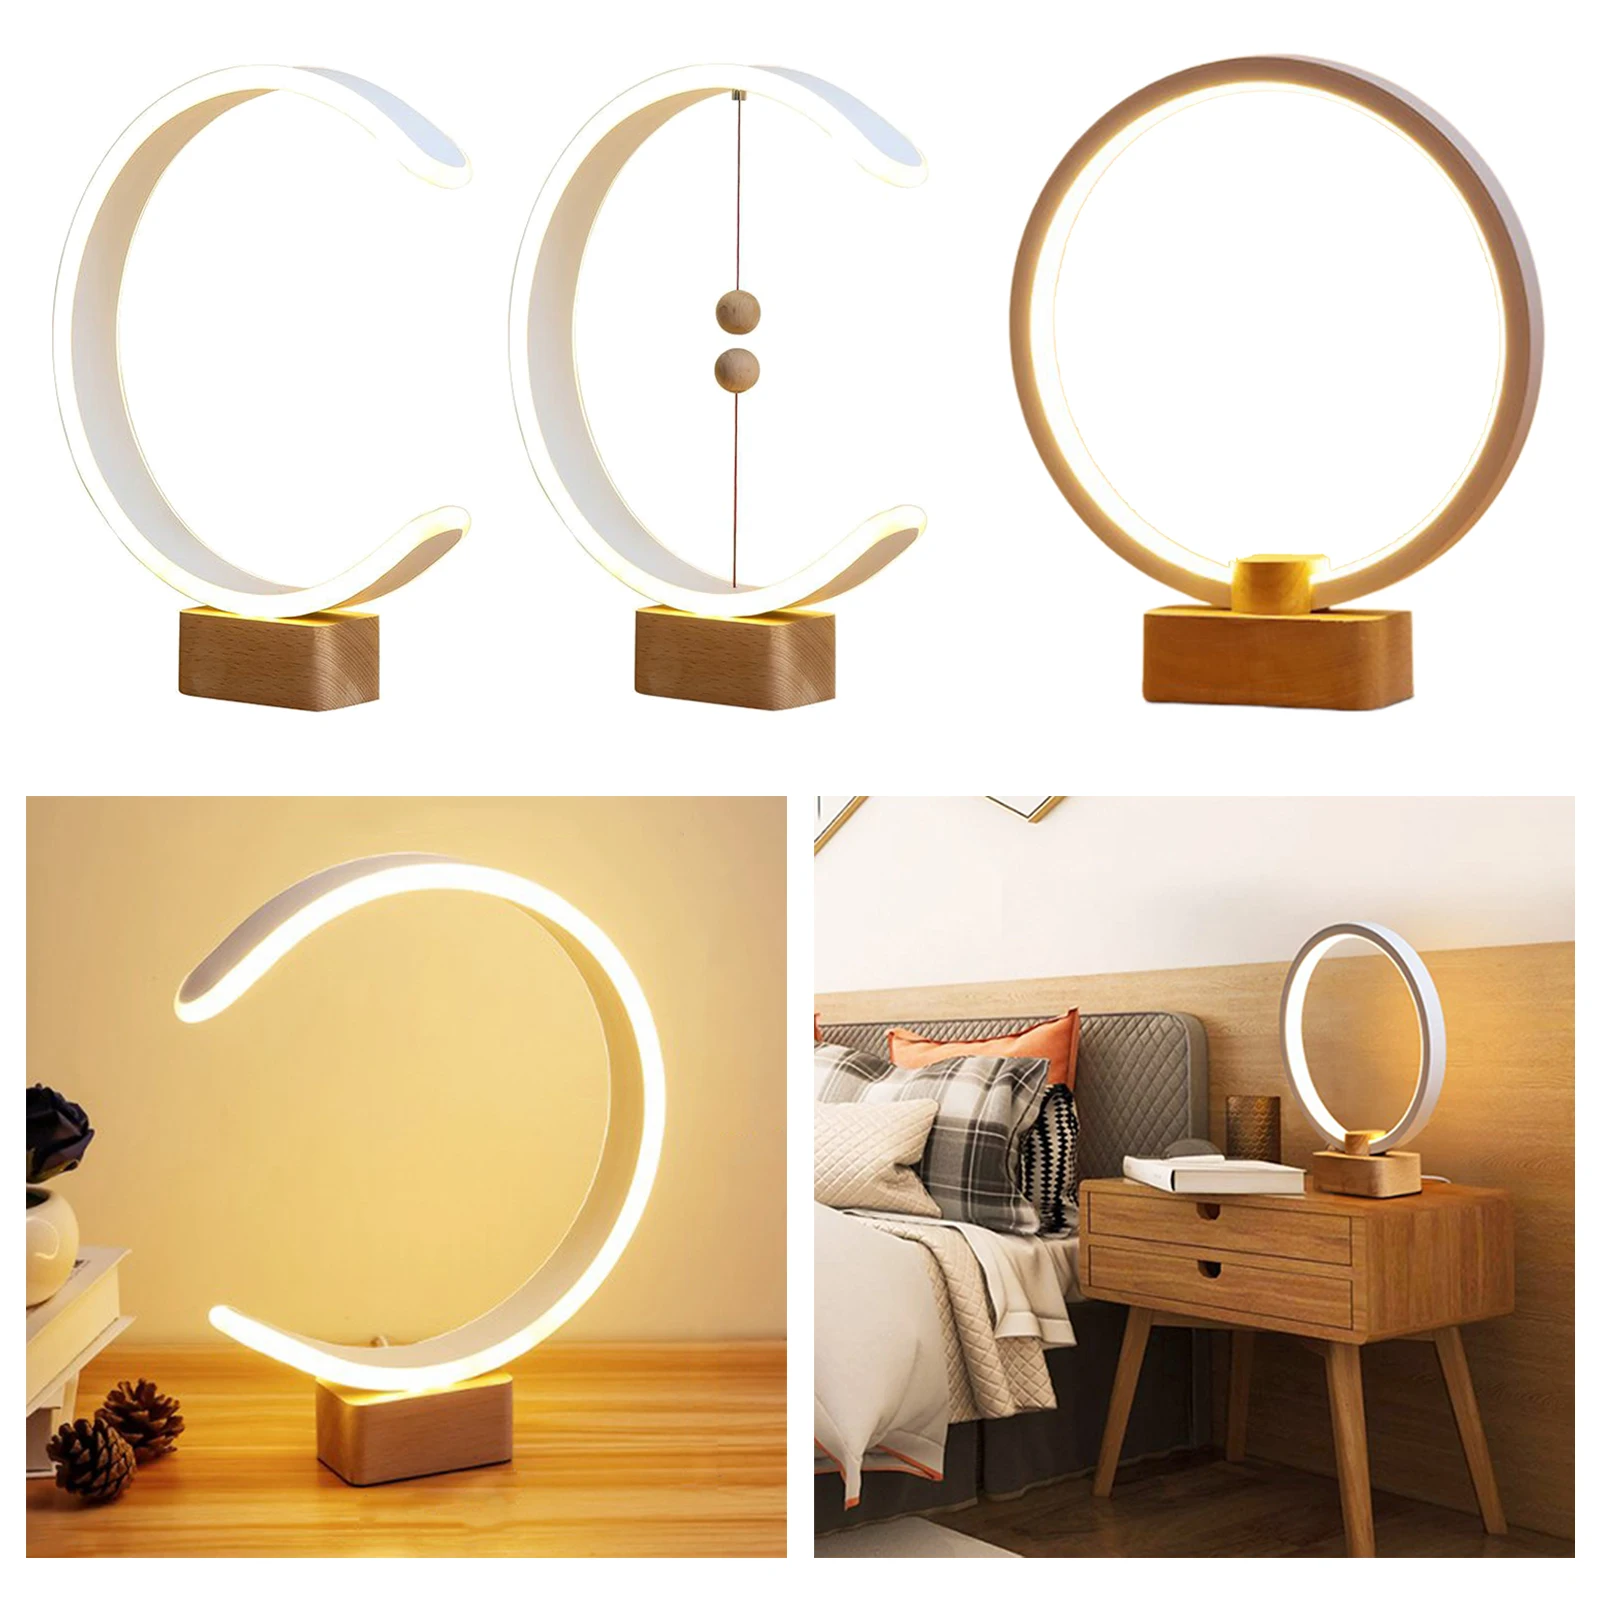 

USB Powered LED Table Lamp, Eye-Care Desk Lamp, Contemporary Soft Light, for Office, Home, Dorm, Bedside